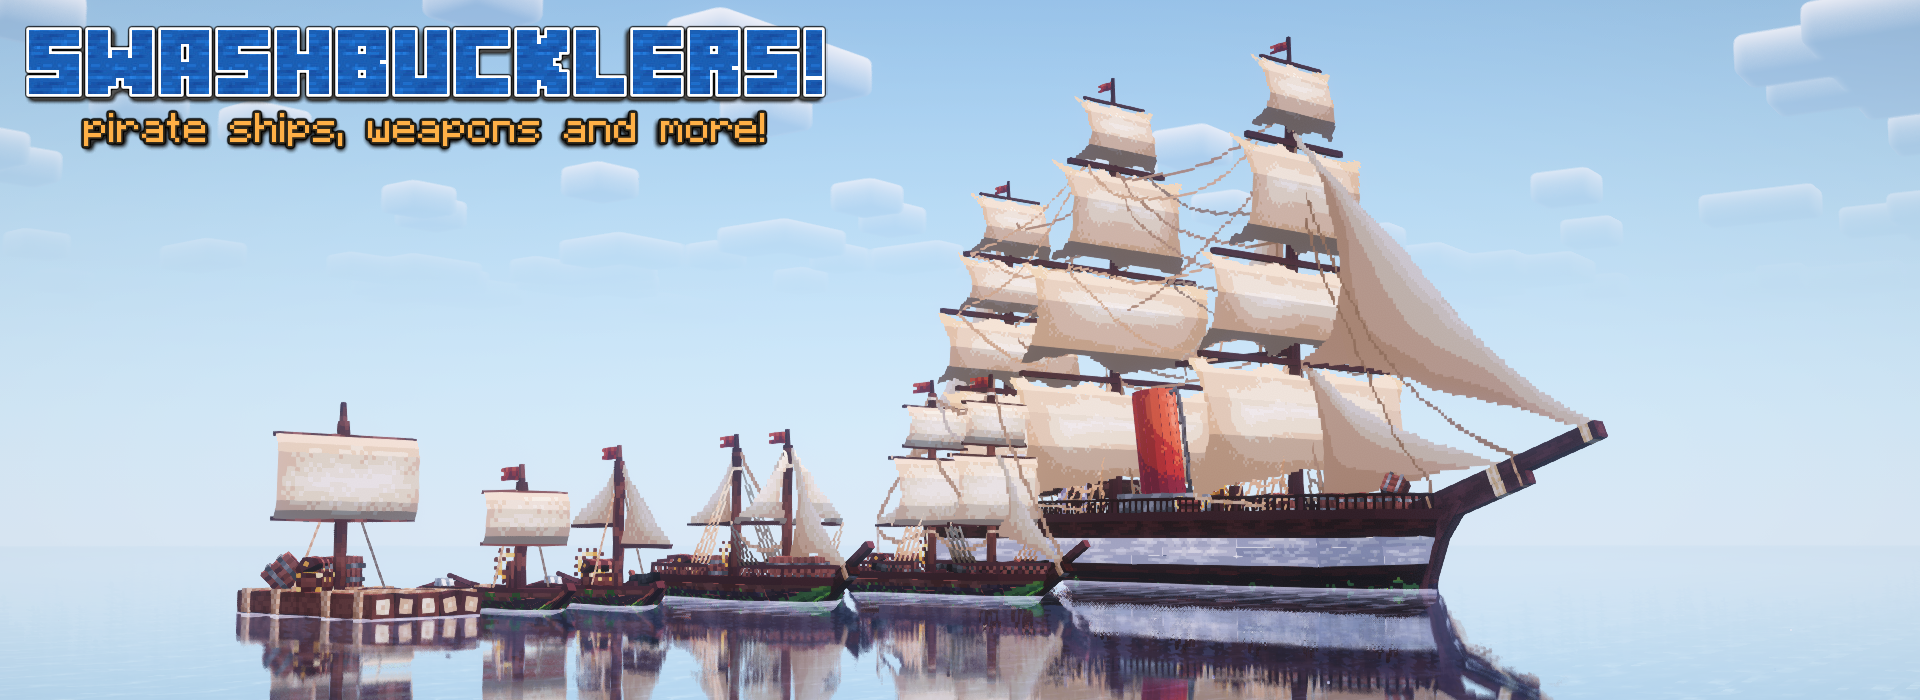 One Piece SeaSick - Minecraft Modpacks - CurseForge